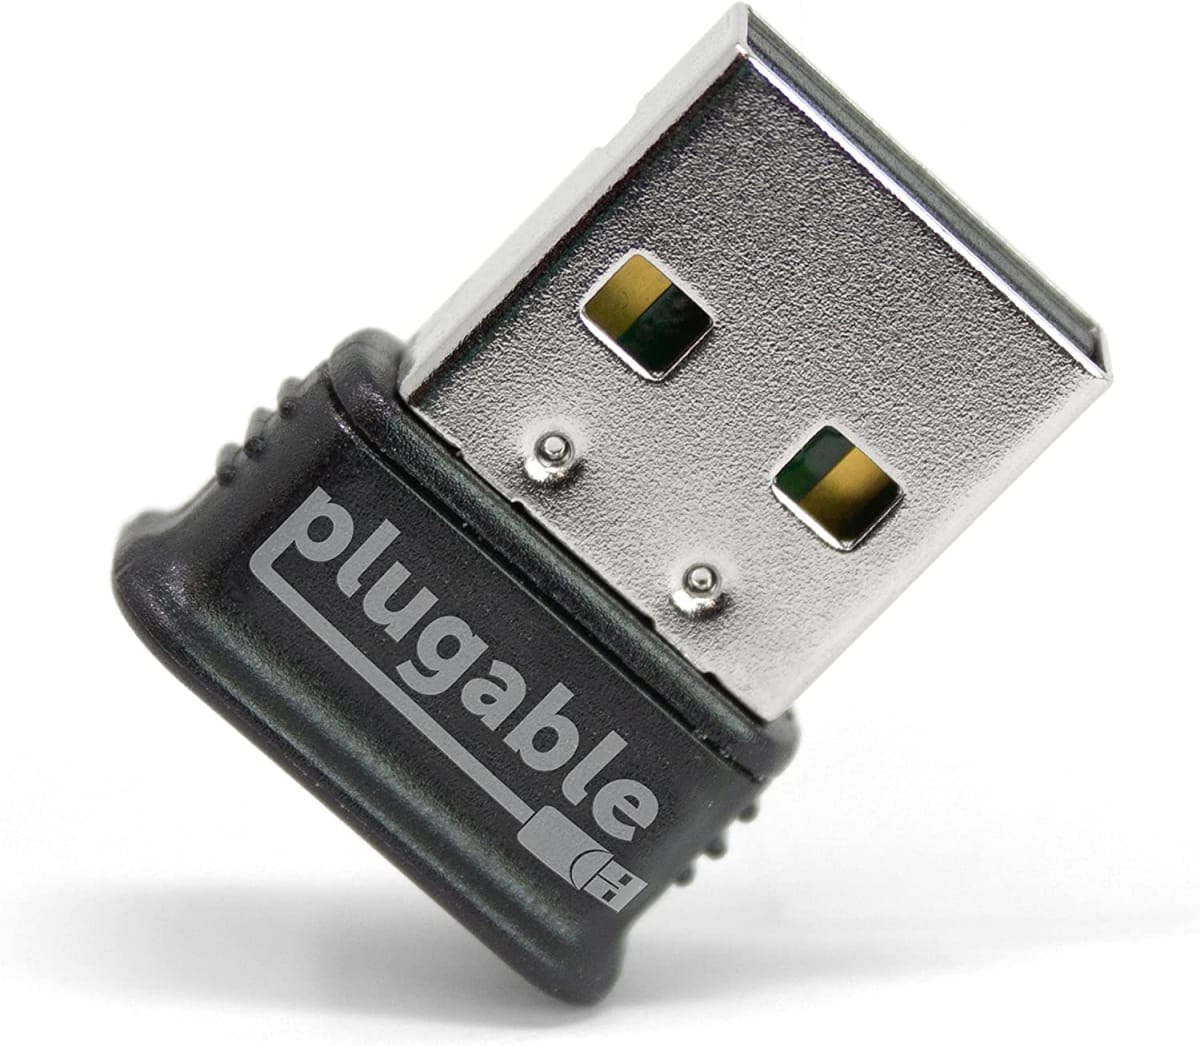 Plugable USB Bluetooth